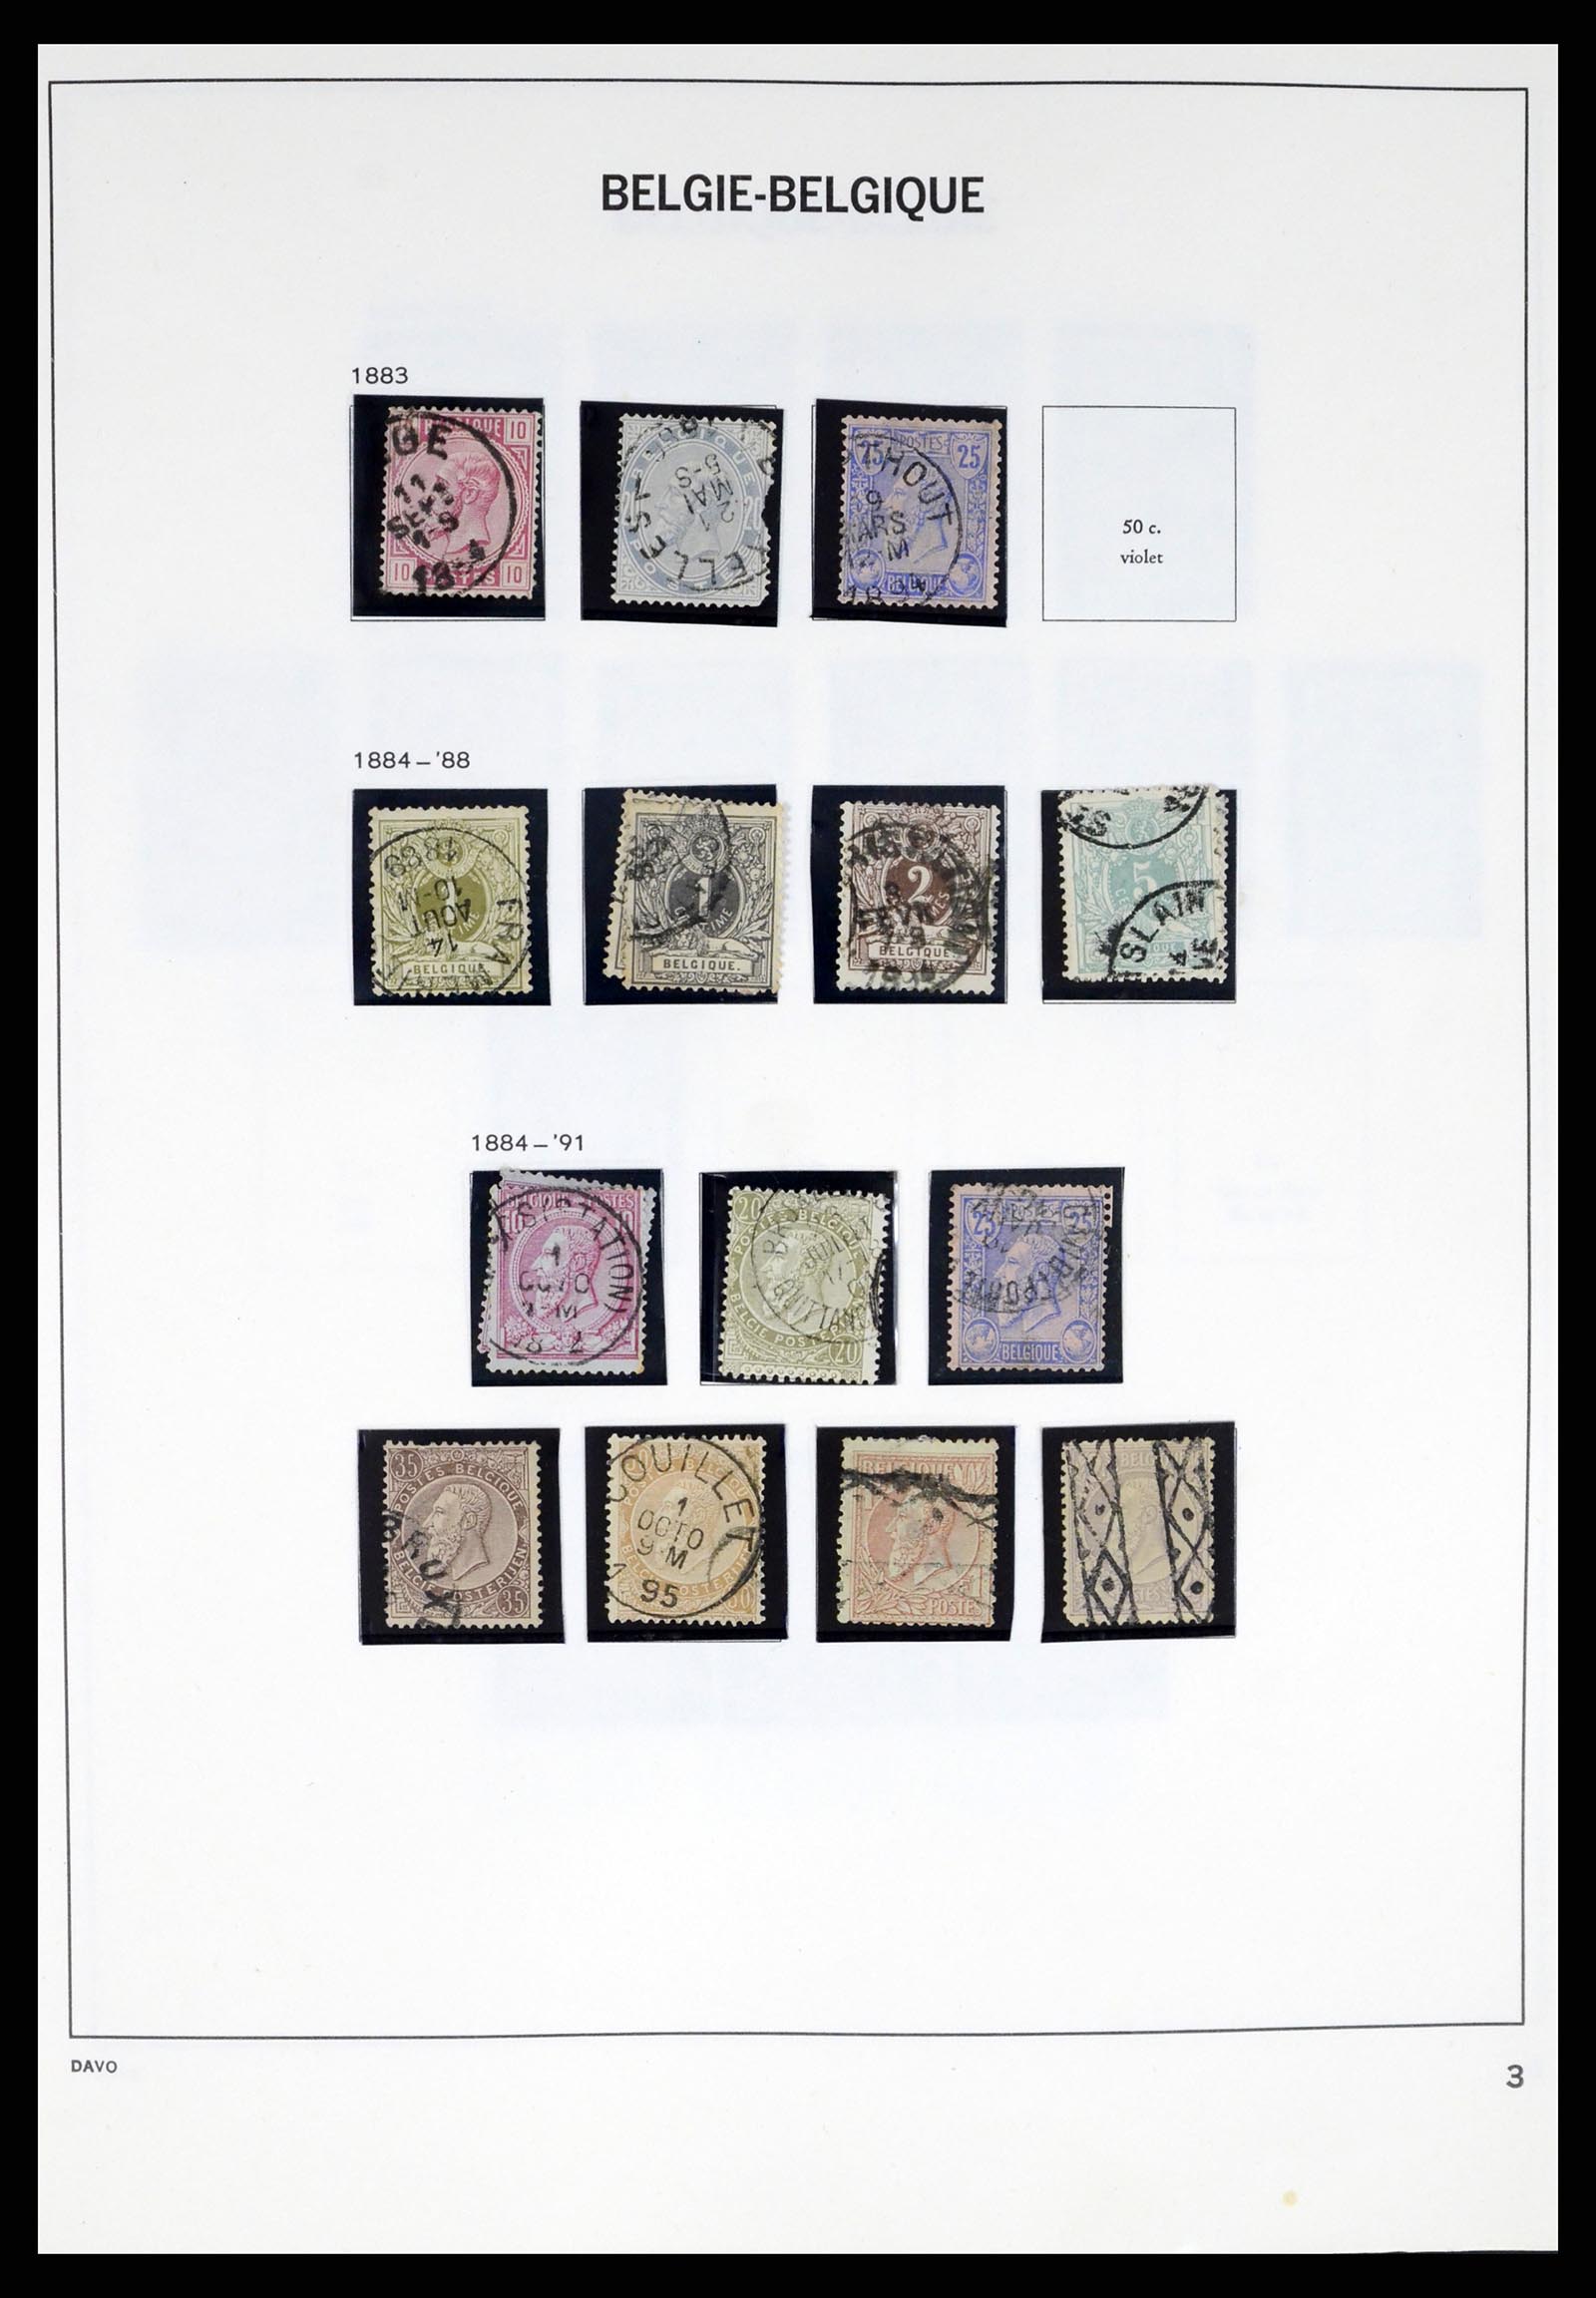 37367 003 - Stamp collection 37367 Belgium 1849-2003.